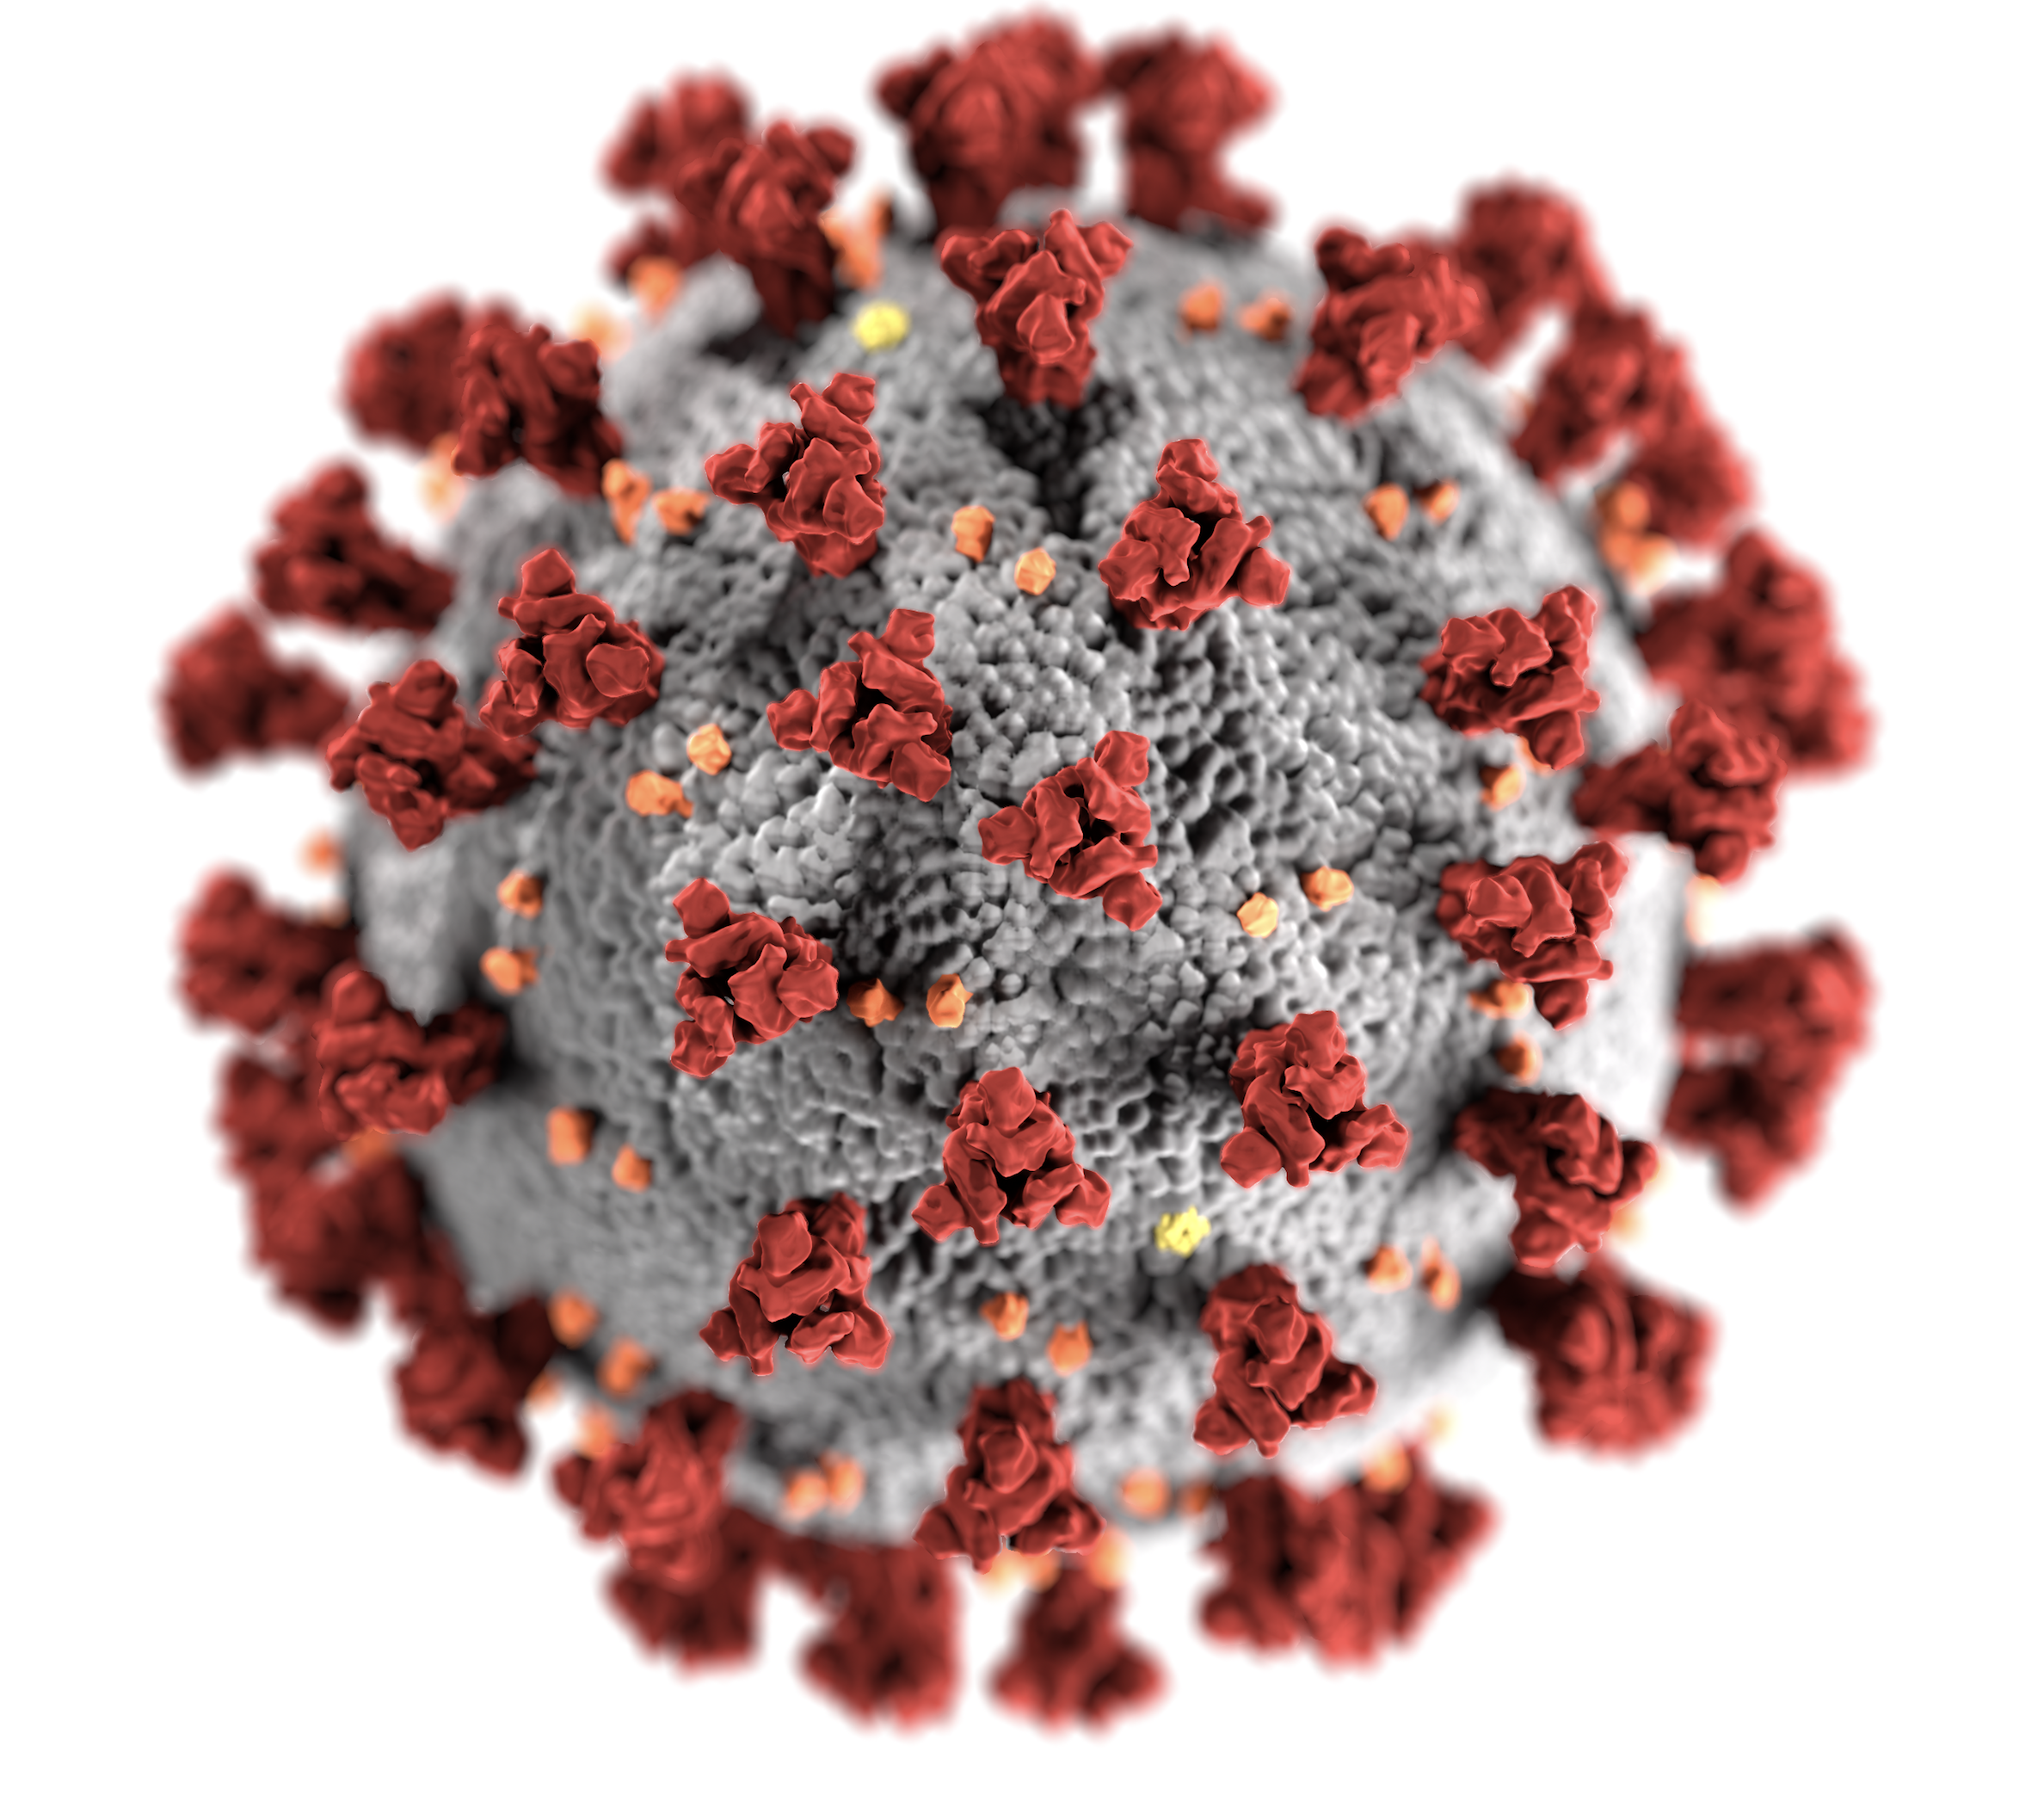 Figure 7: Illustration of novel coronavirus created by CDC artists.